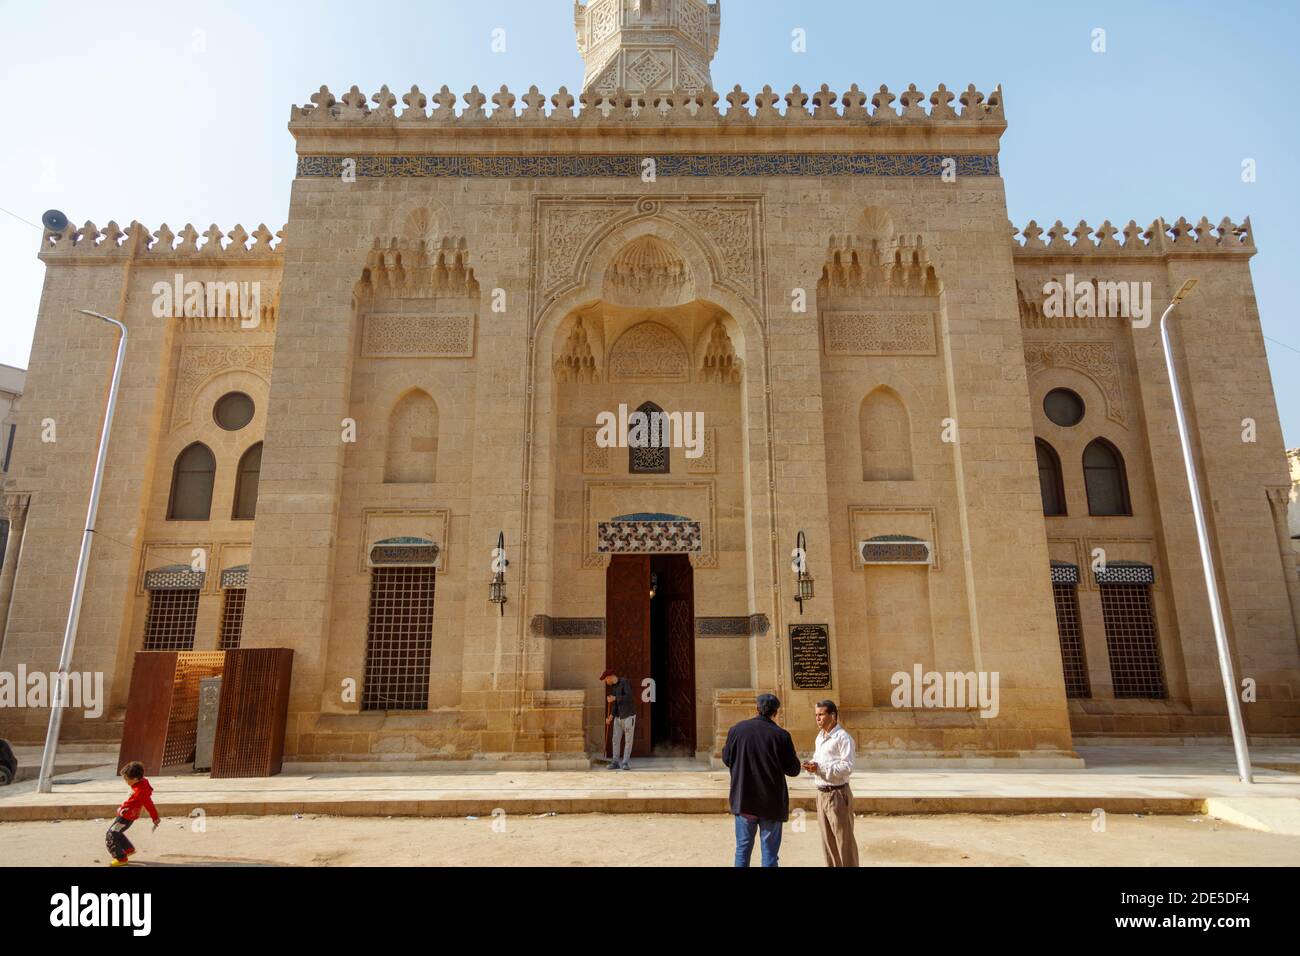 Mosque of Imam al-Shafi'i, 19th century Mamluk revival building, Cairo, Egypt Stock Photo